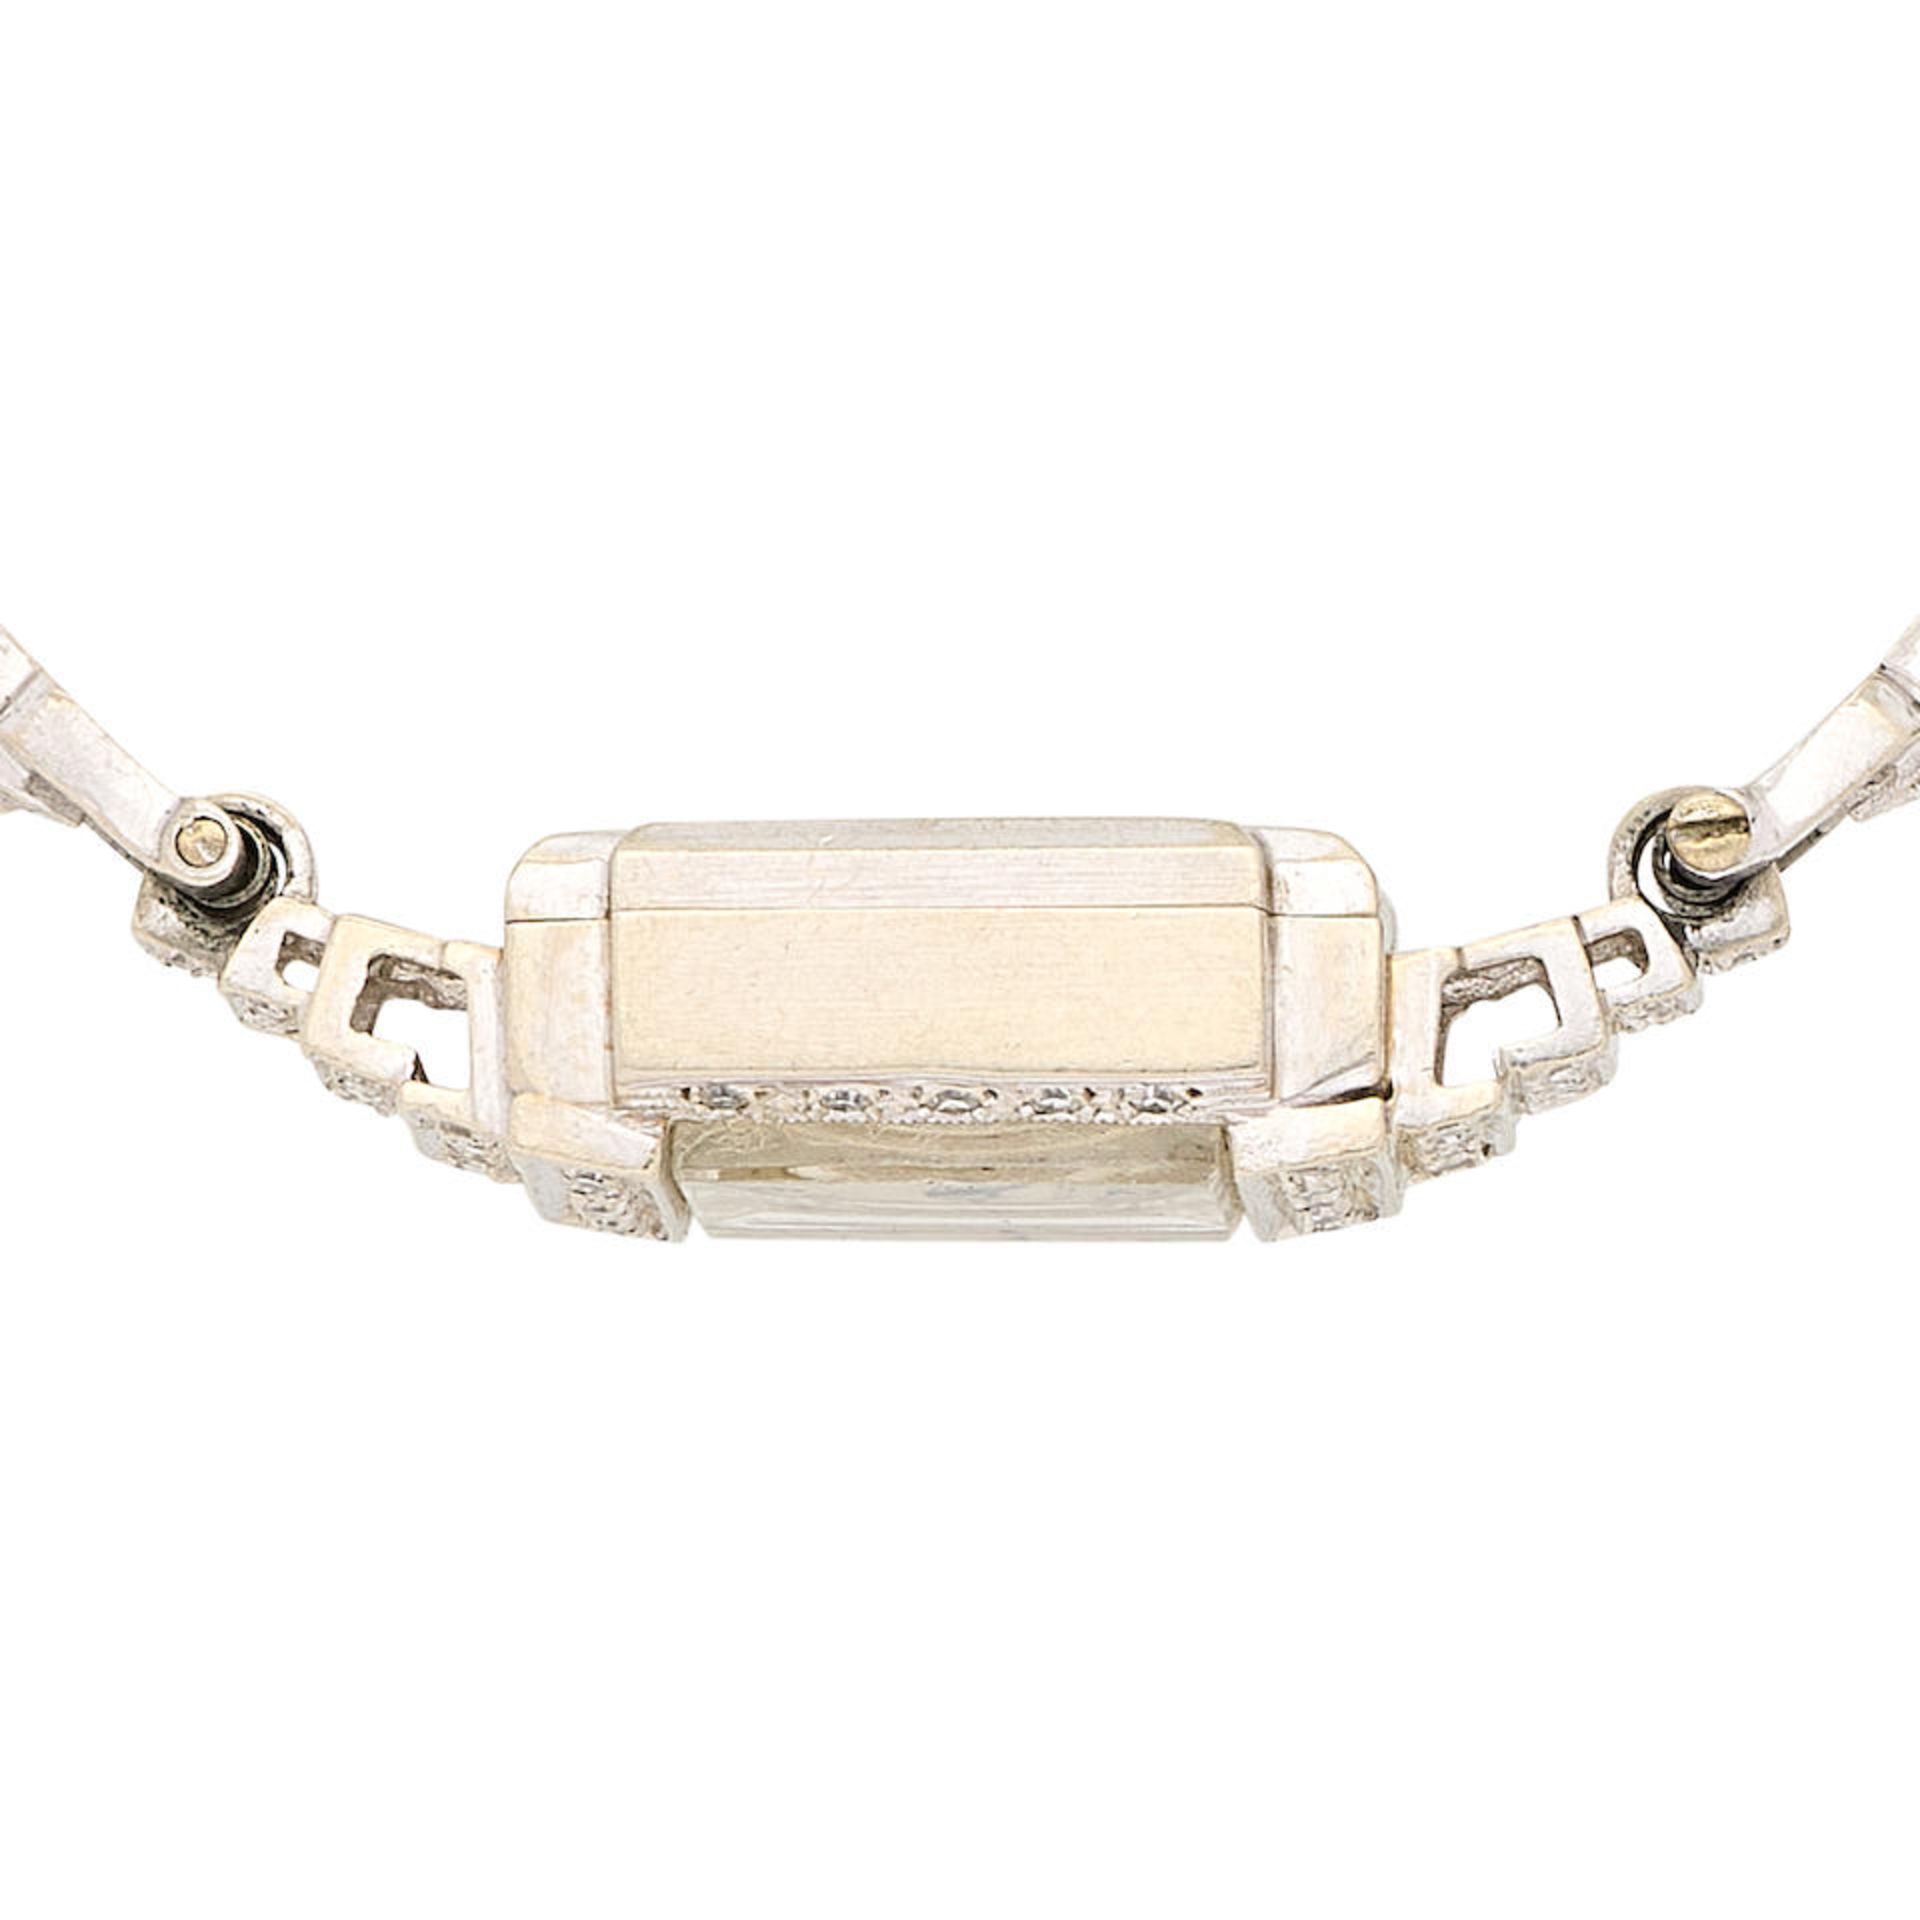 Hamilton. A lady's 14K white gold diamond set manual wind bracelet watch Circa 1950 - Image 3 of 7